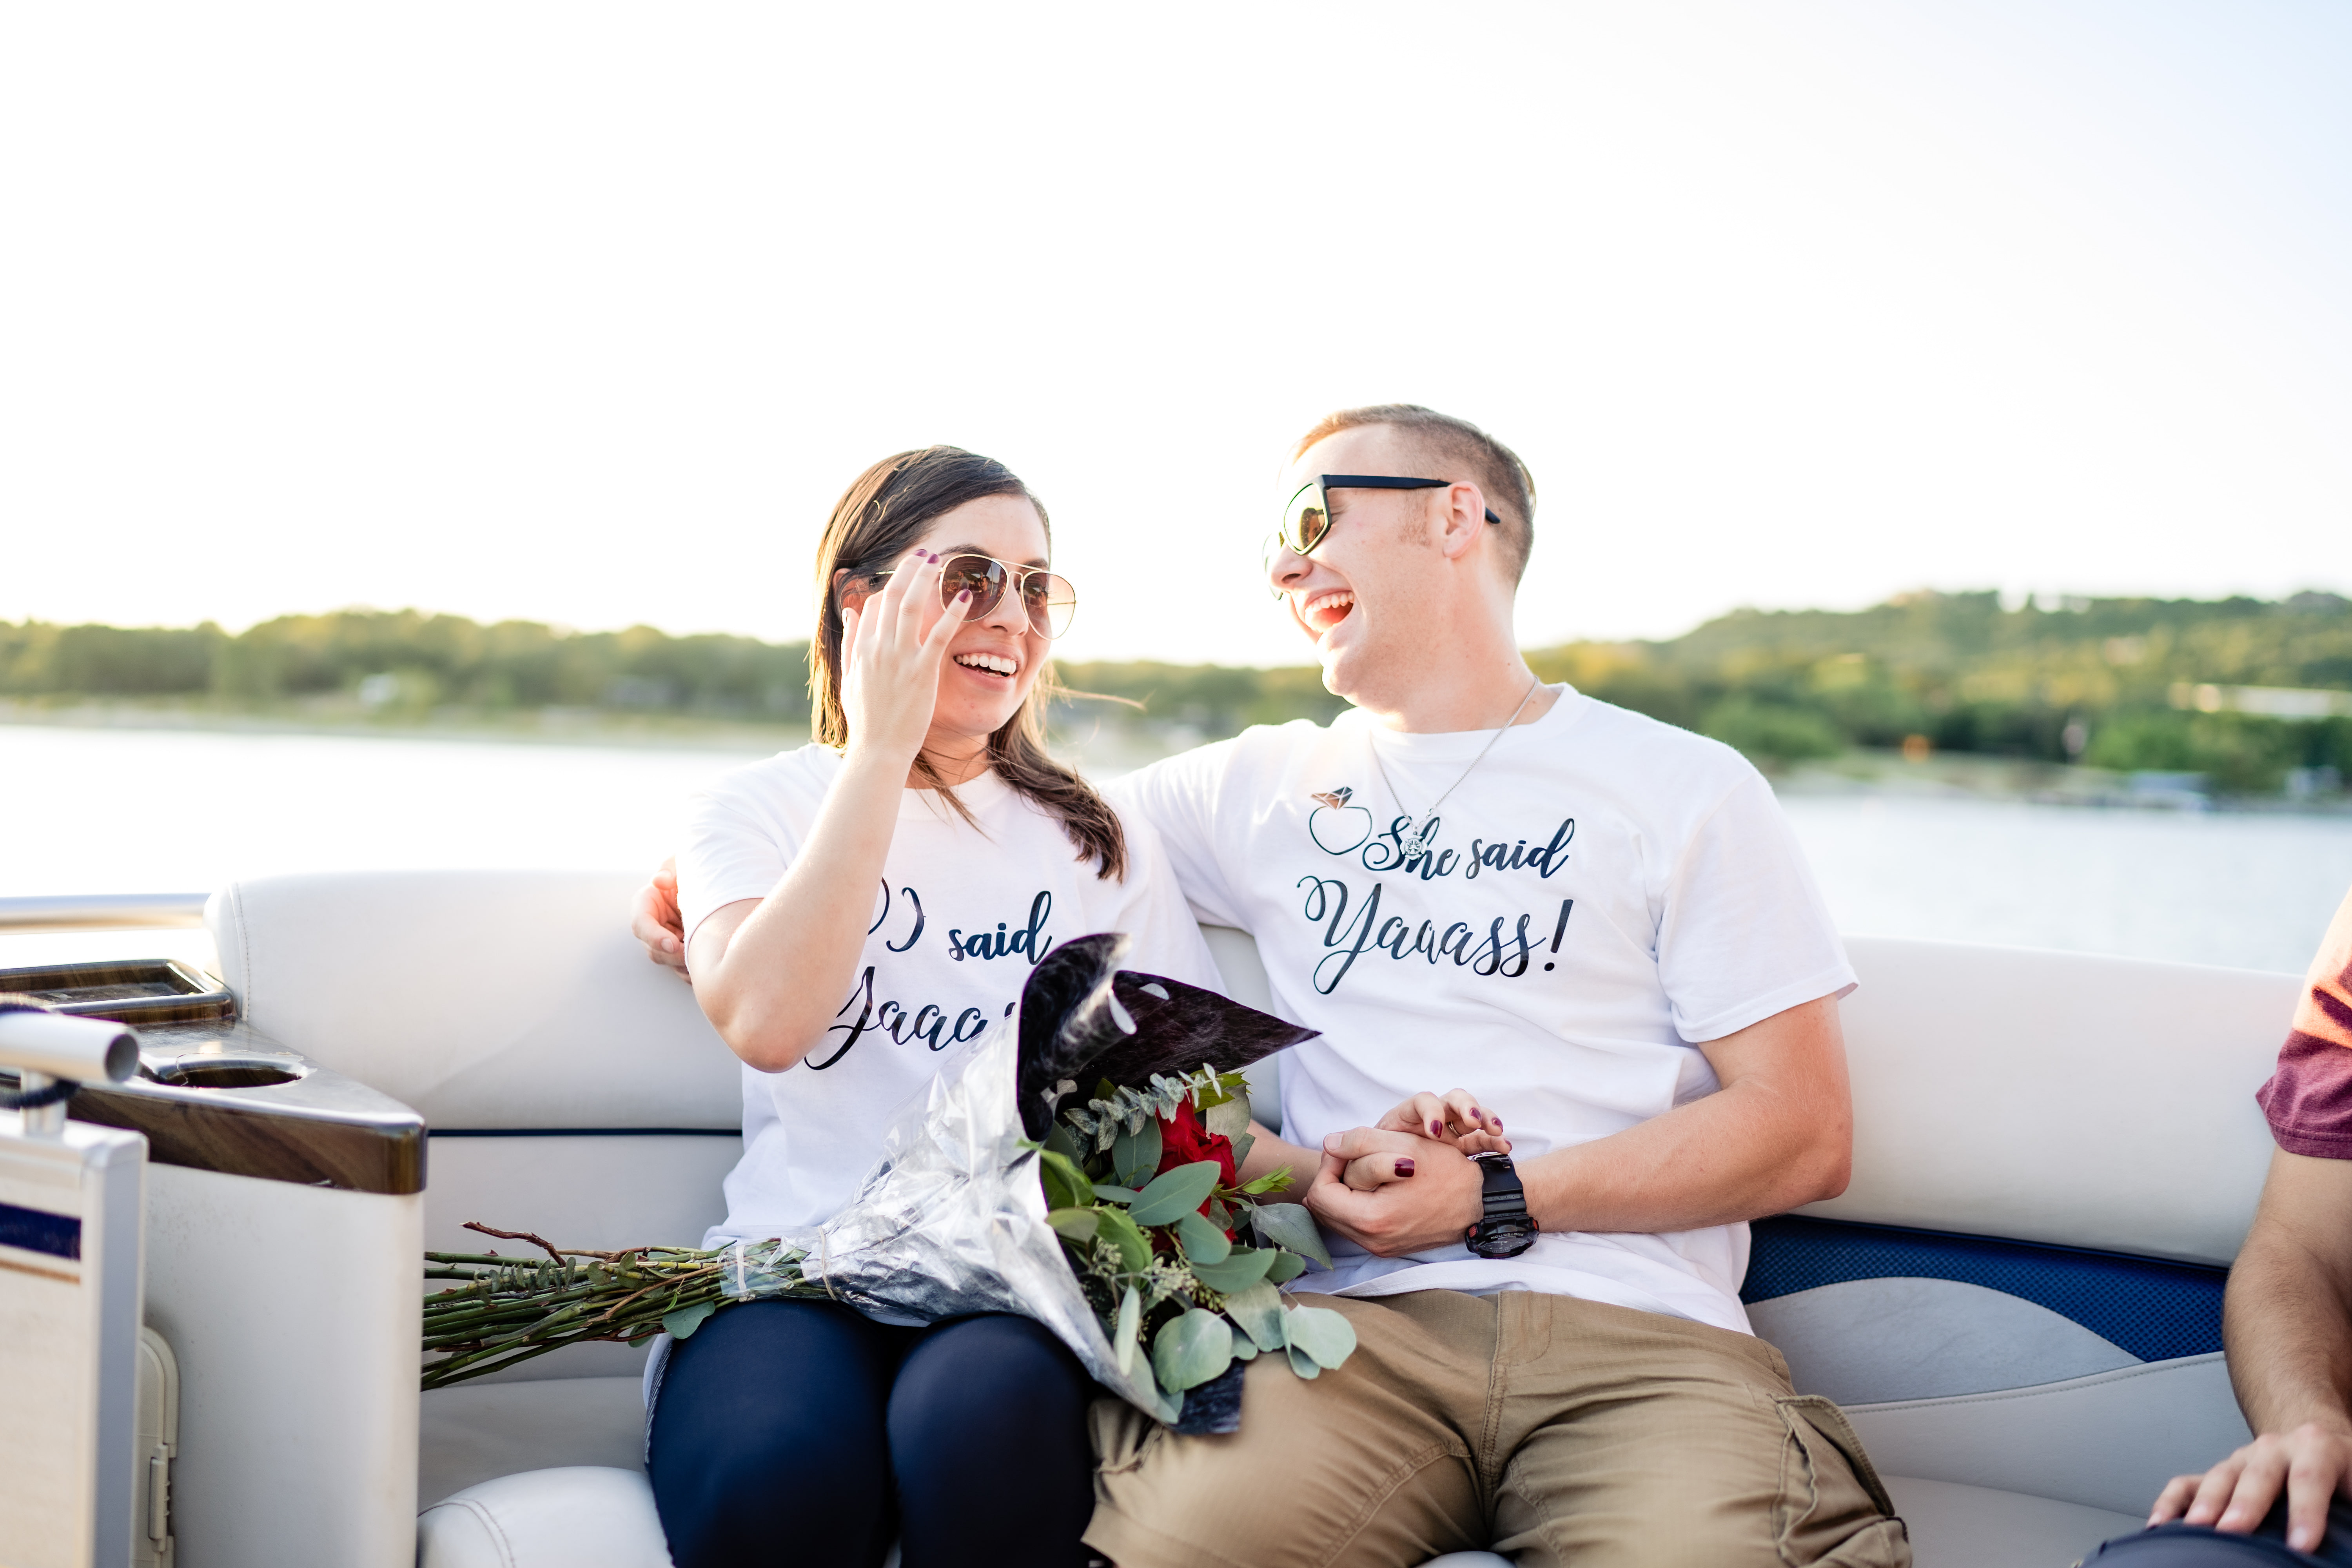 Lake travis wedding proposal on a boat ride